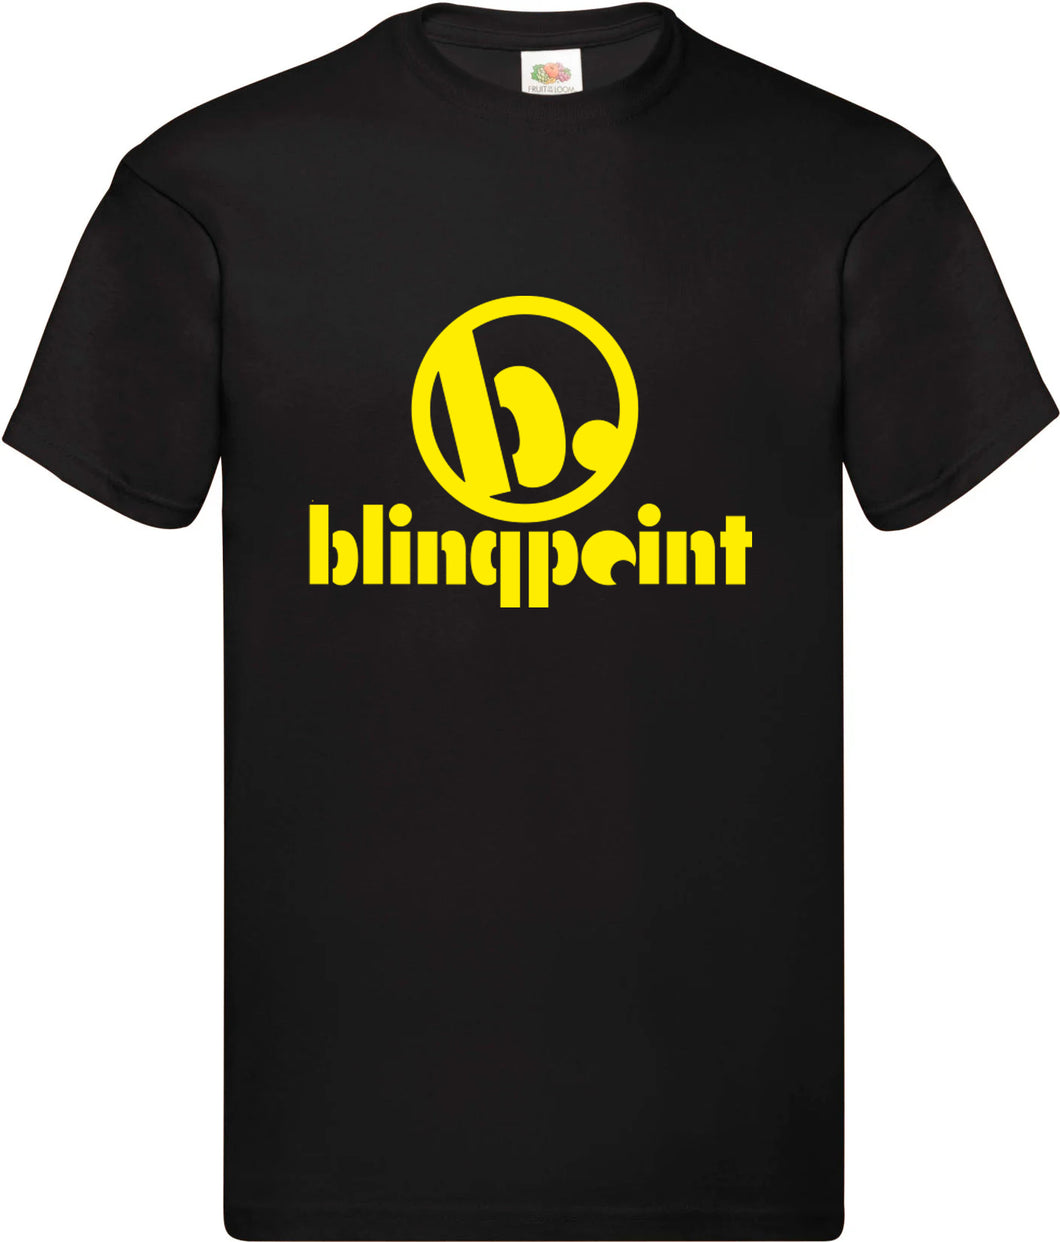 T-Shirt - Blingpoint Logo mit Schrift